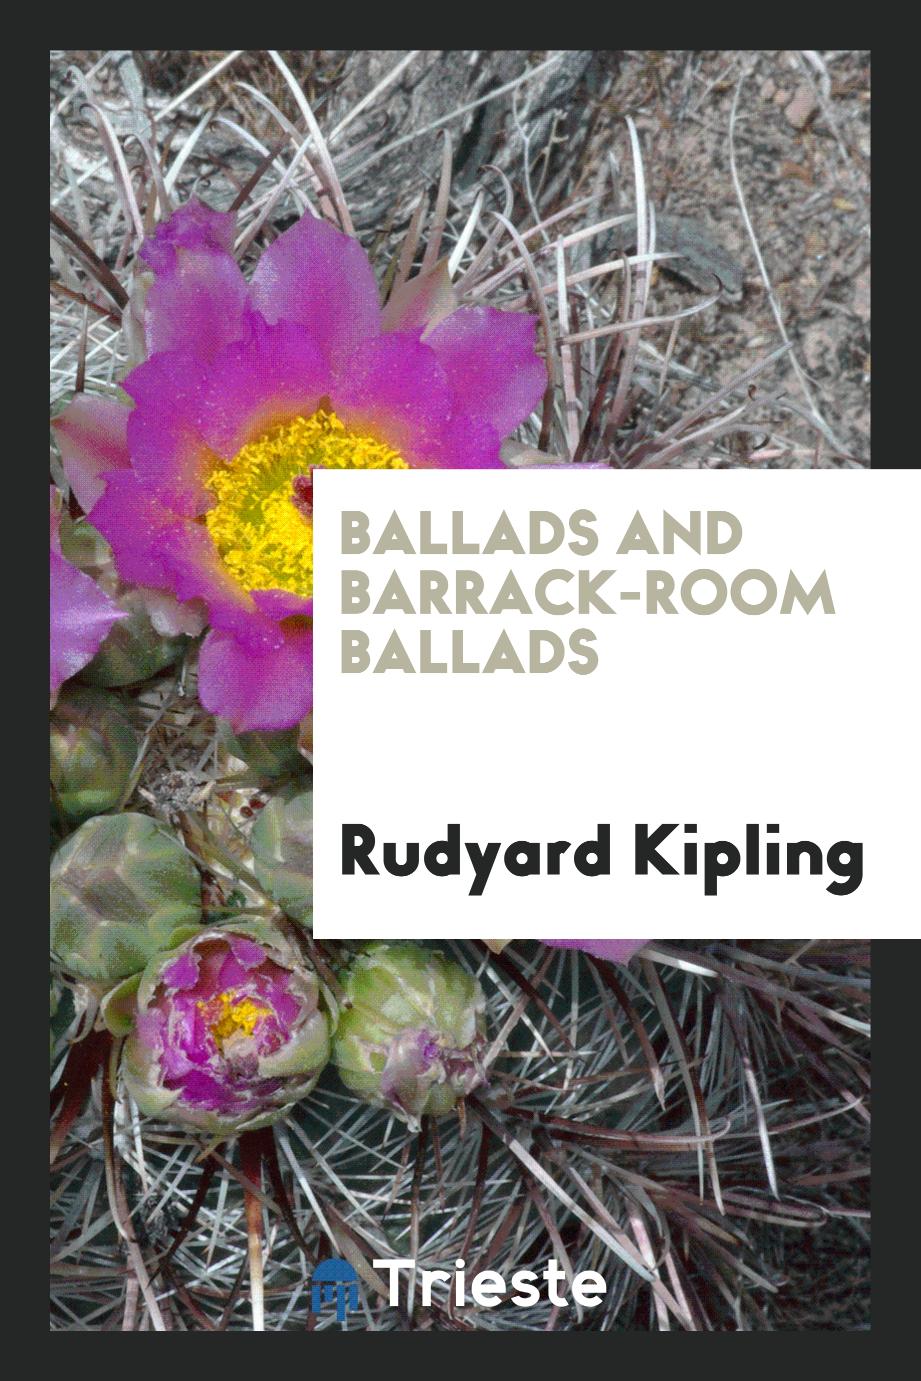 Ballads and Barrack-Room Ballads